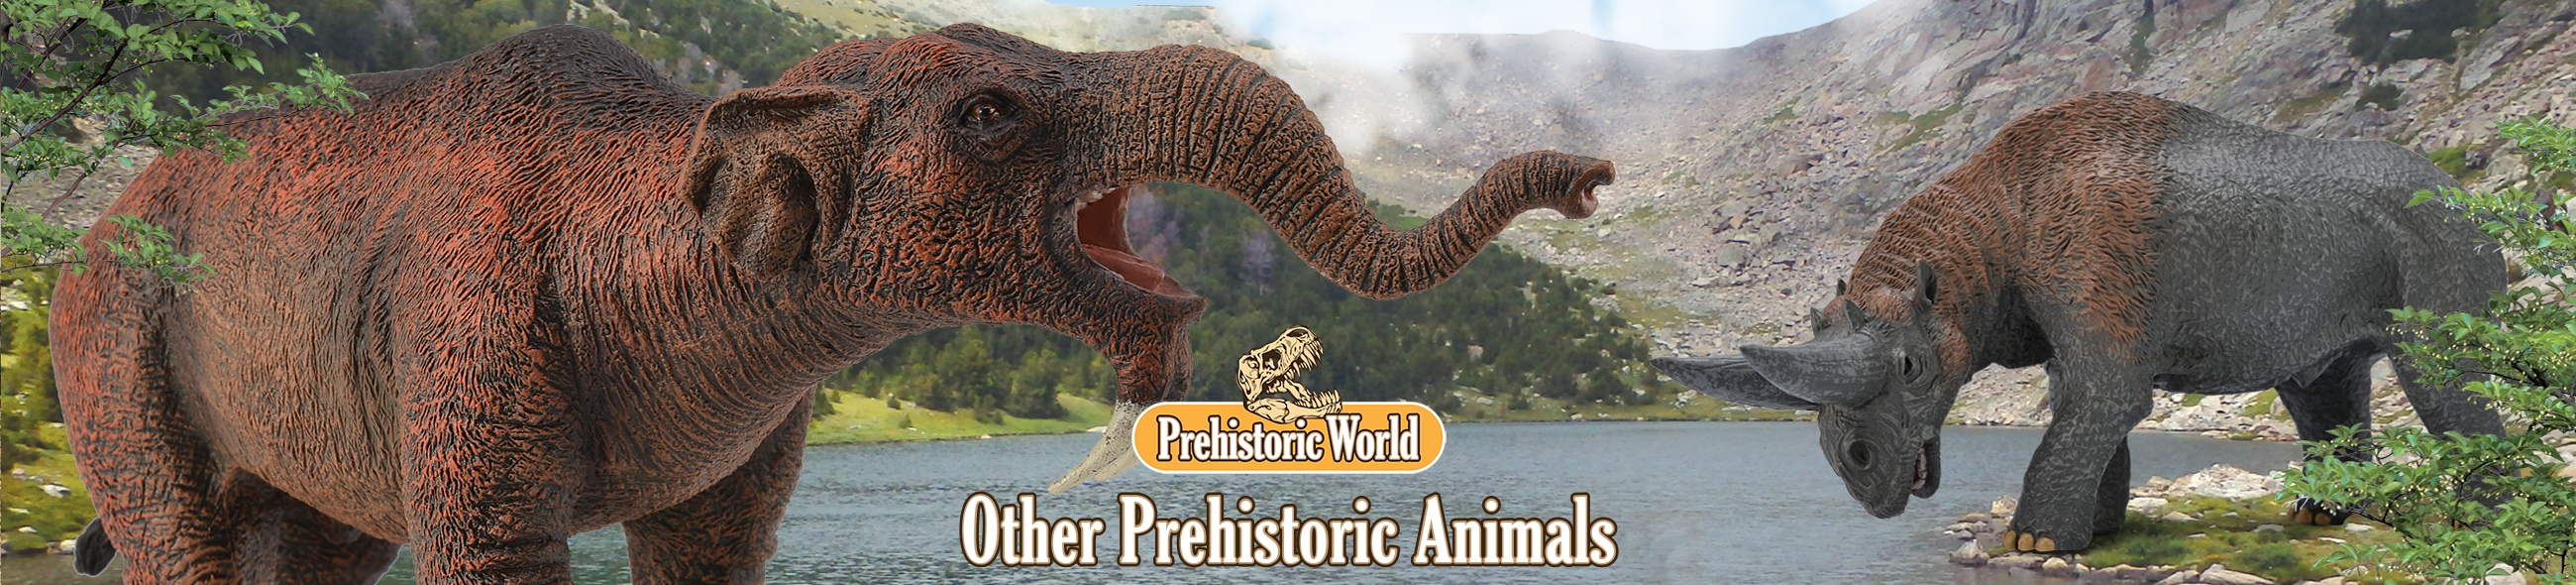 Other Prehistoric Animals